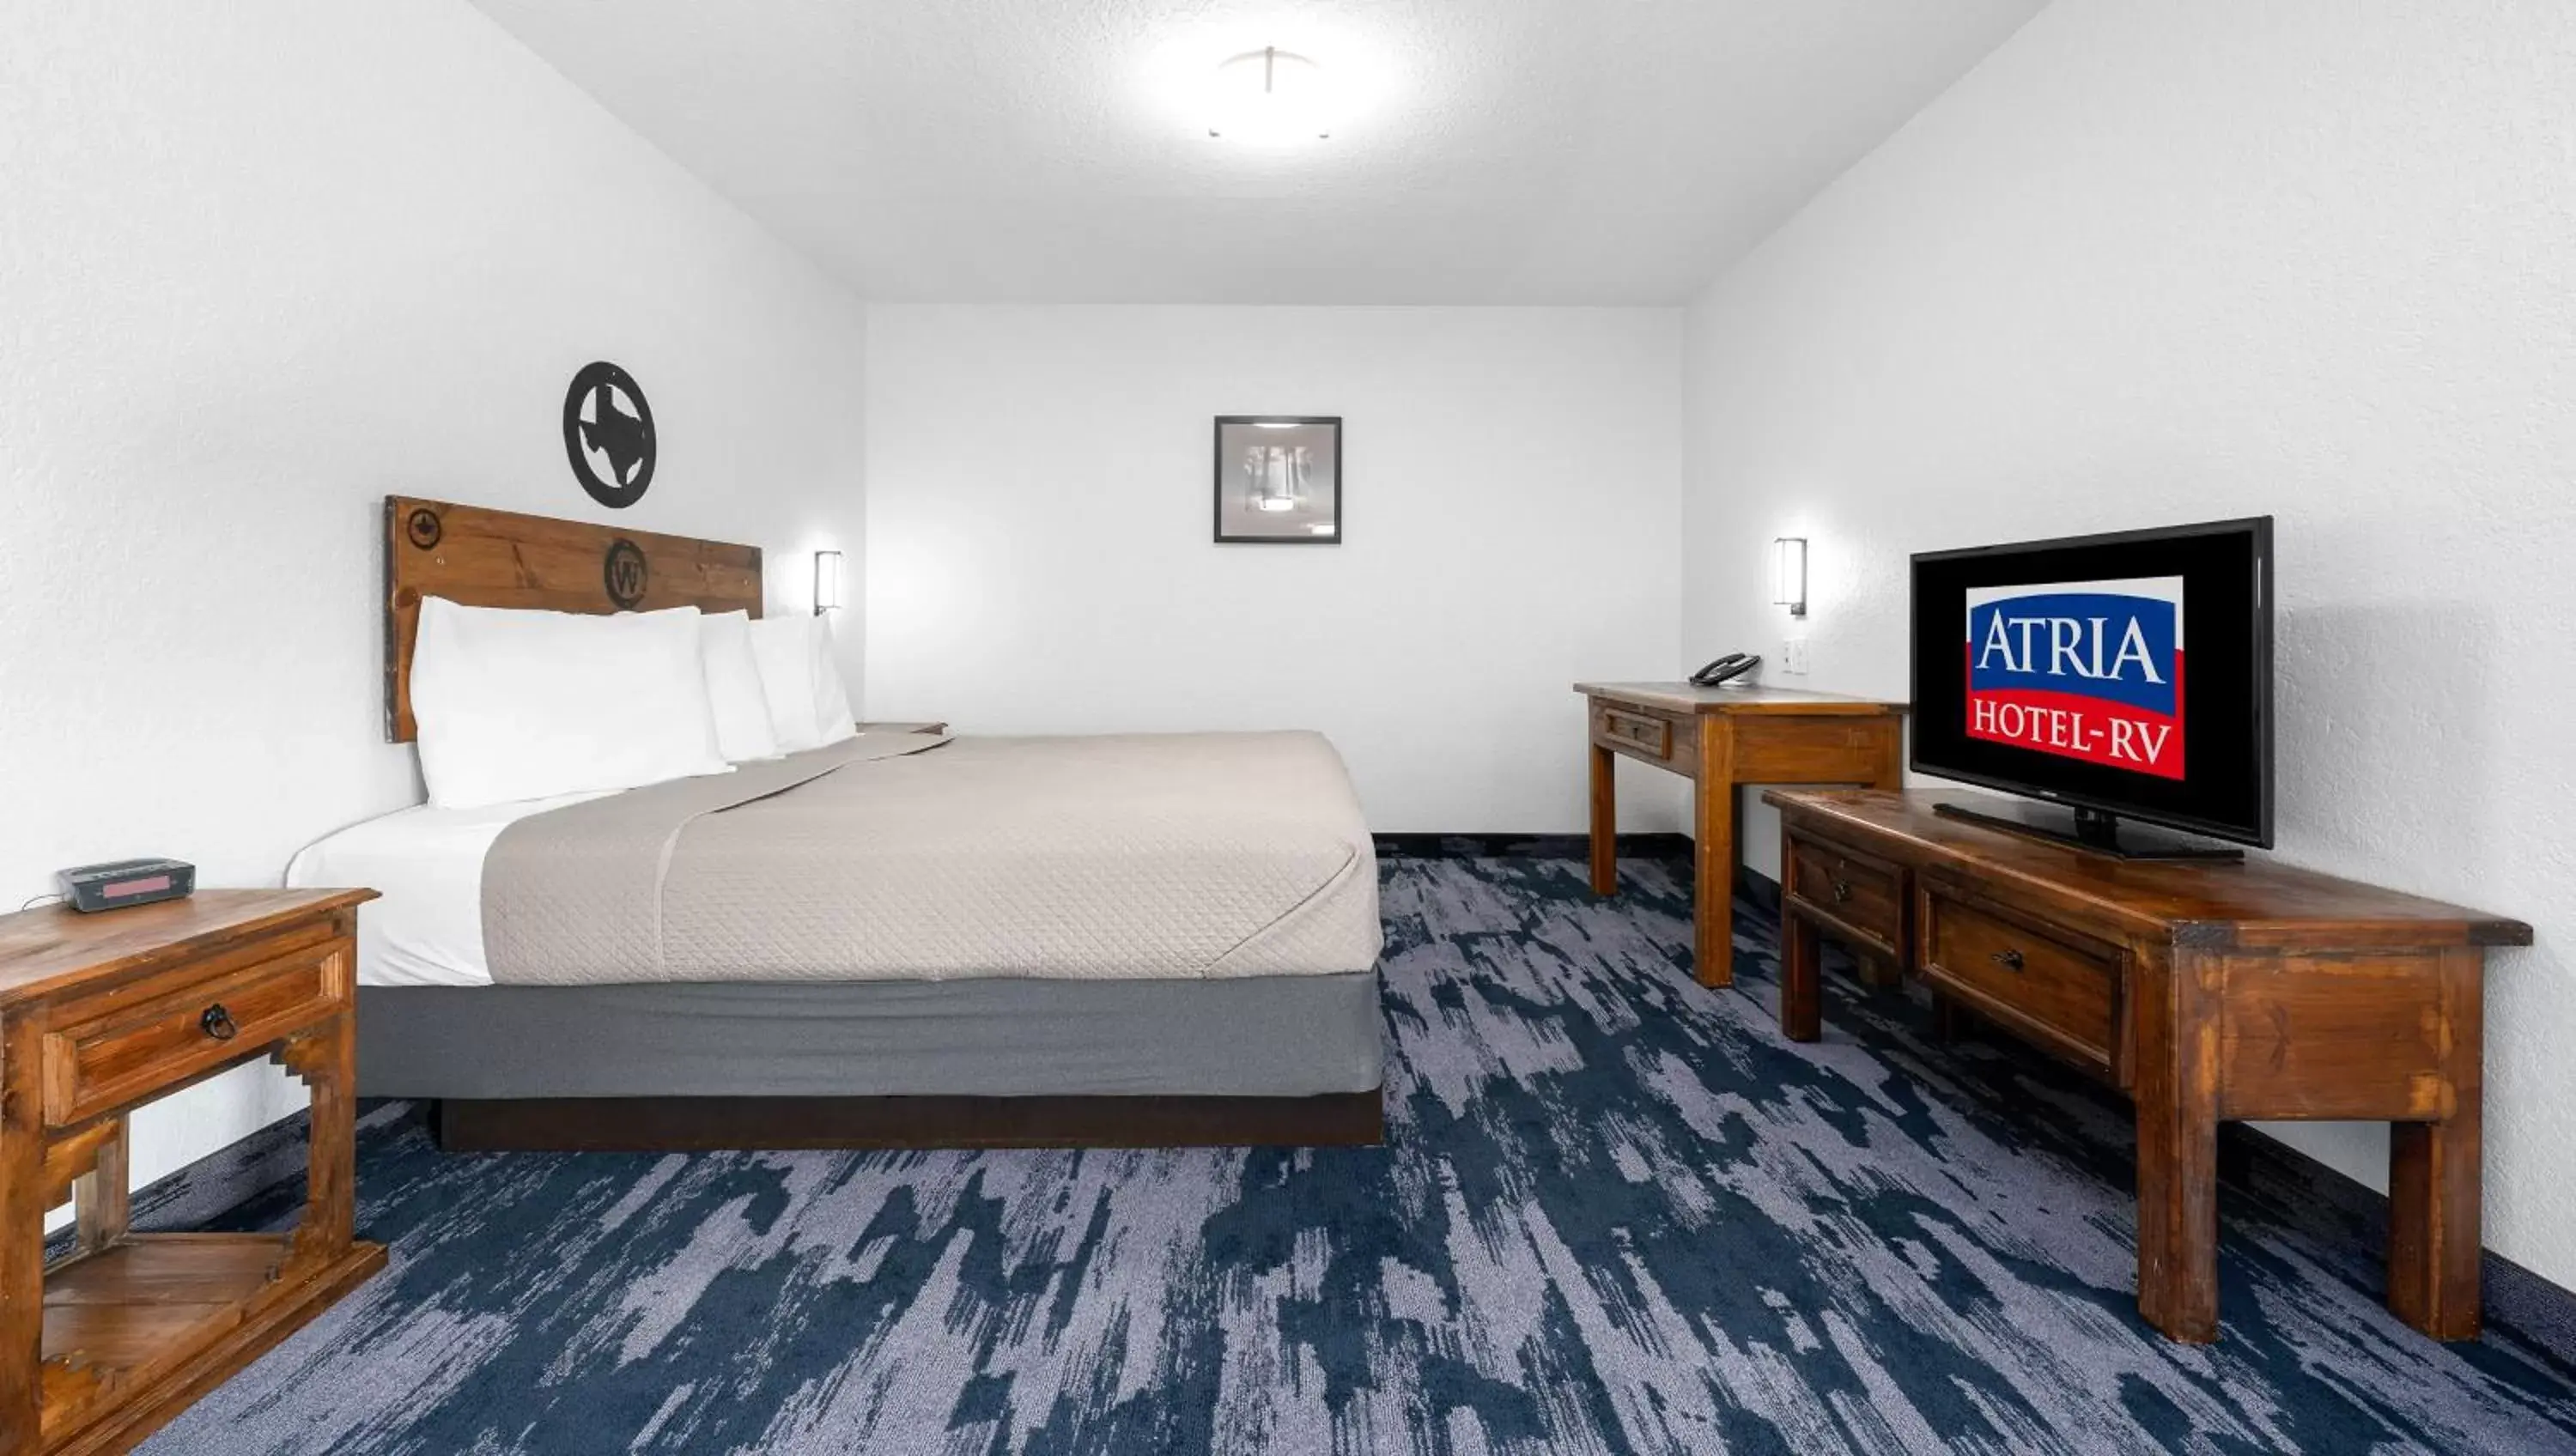 Bedroom, Bed in Atria Hotel and RV McGregor